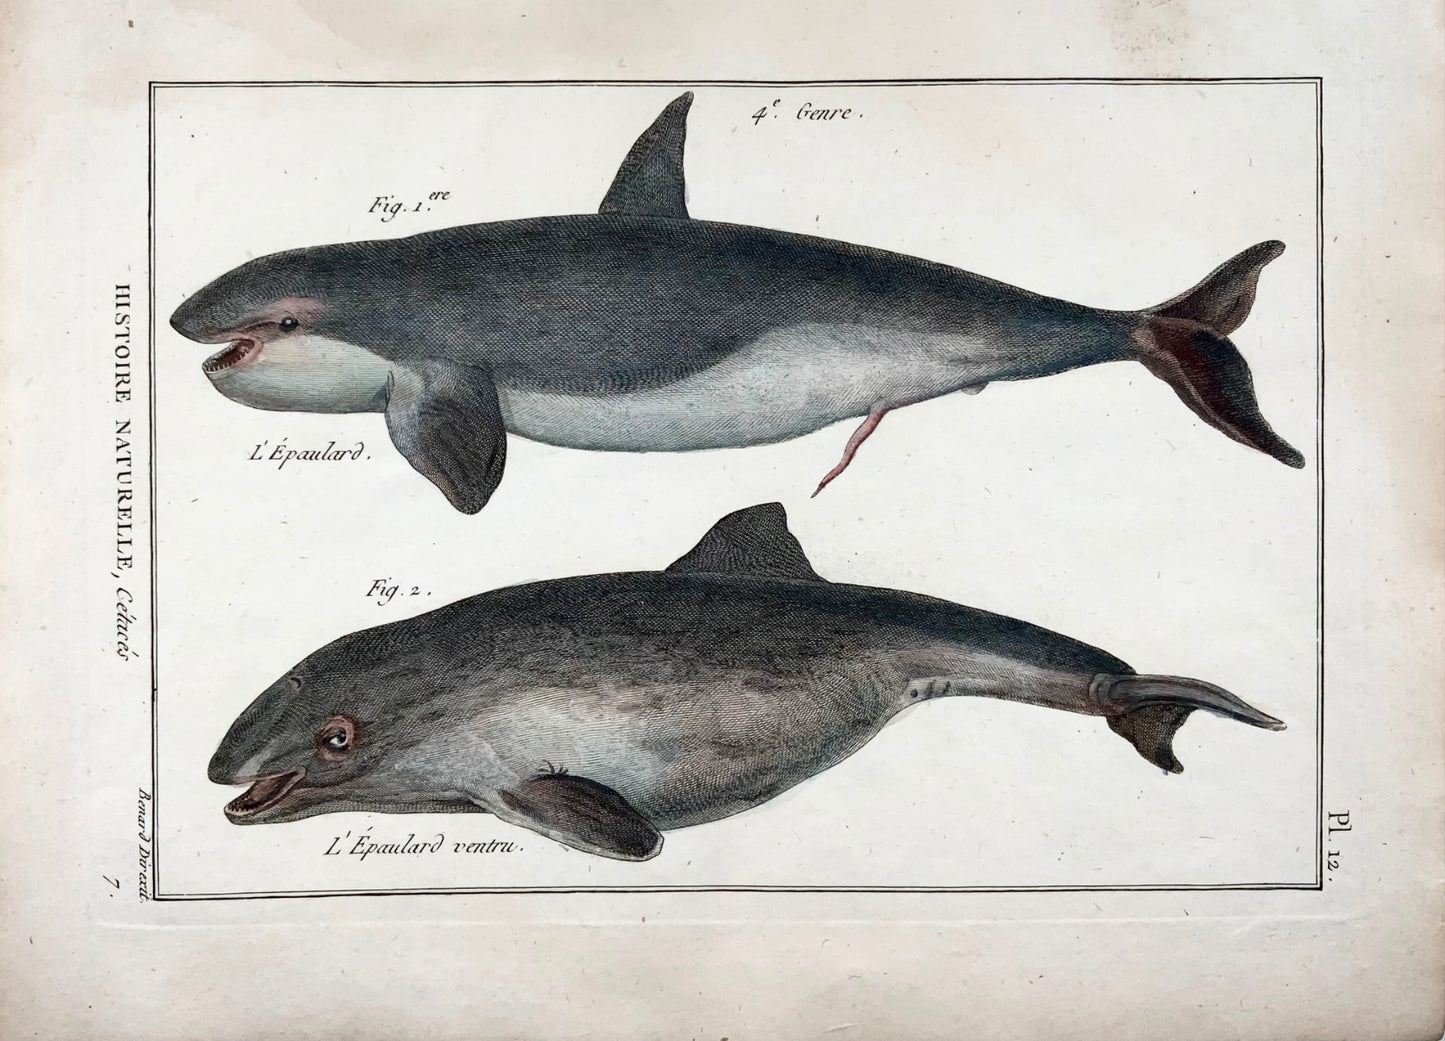 1789 Orque, baleines, mammifères, Benard sc. in-quarto, couleur à la main, gravure, vie marine